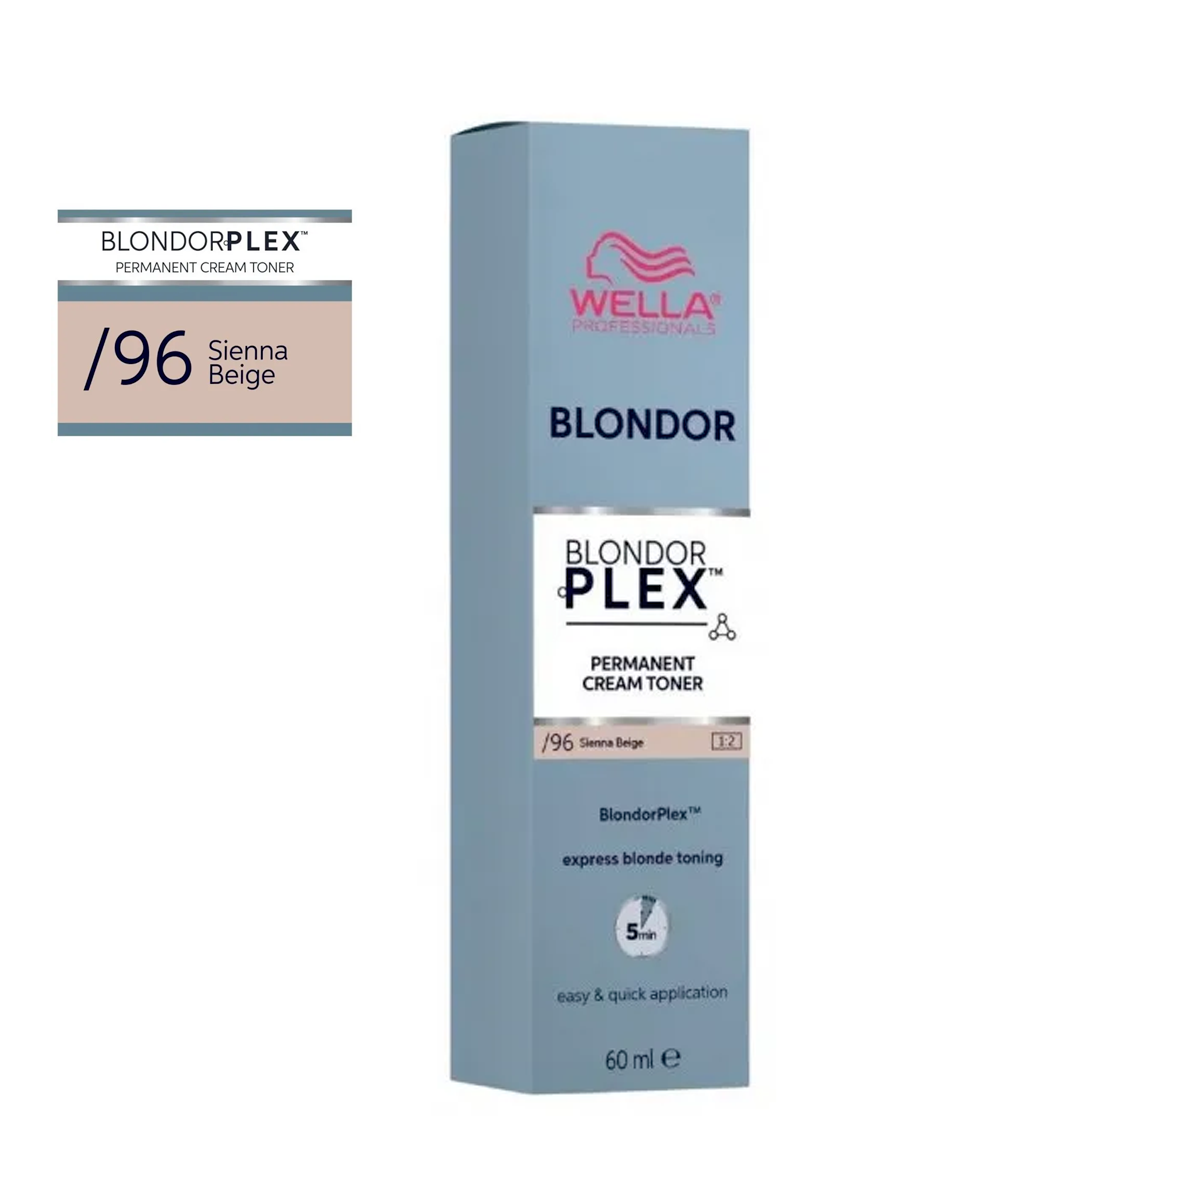 BlondorPlex Crème Tonique 60ml Wella - Teinte /96